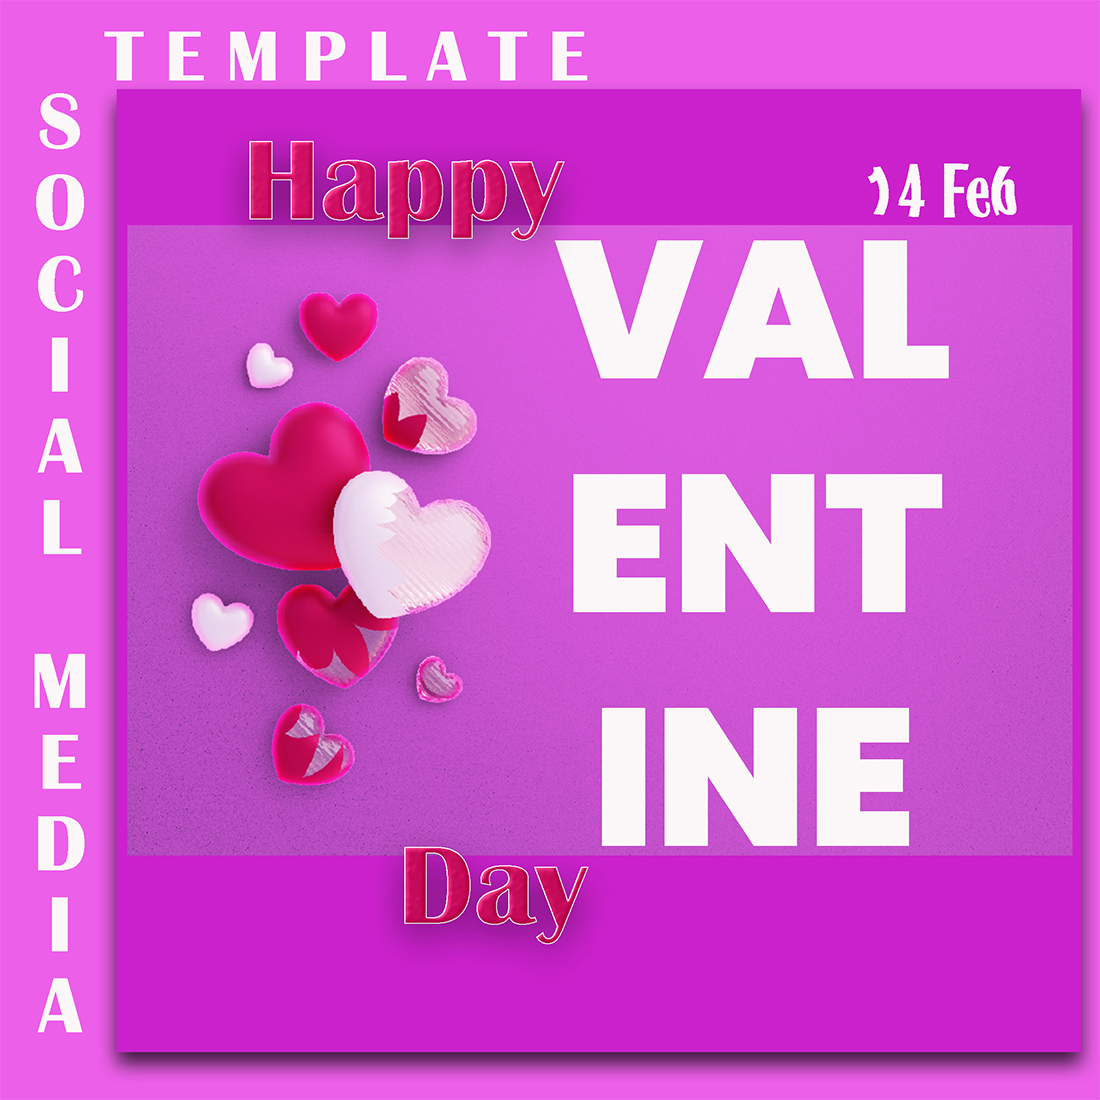 14 Feb International Valentine day cover image.